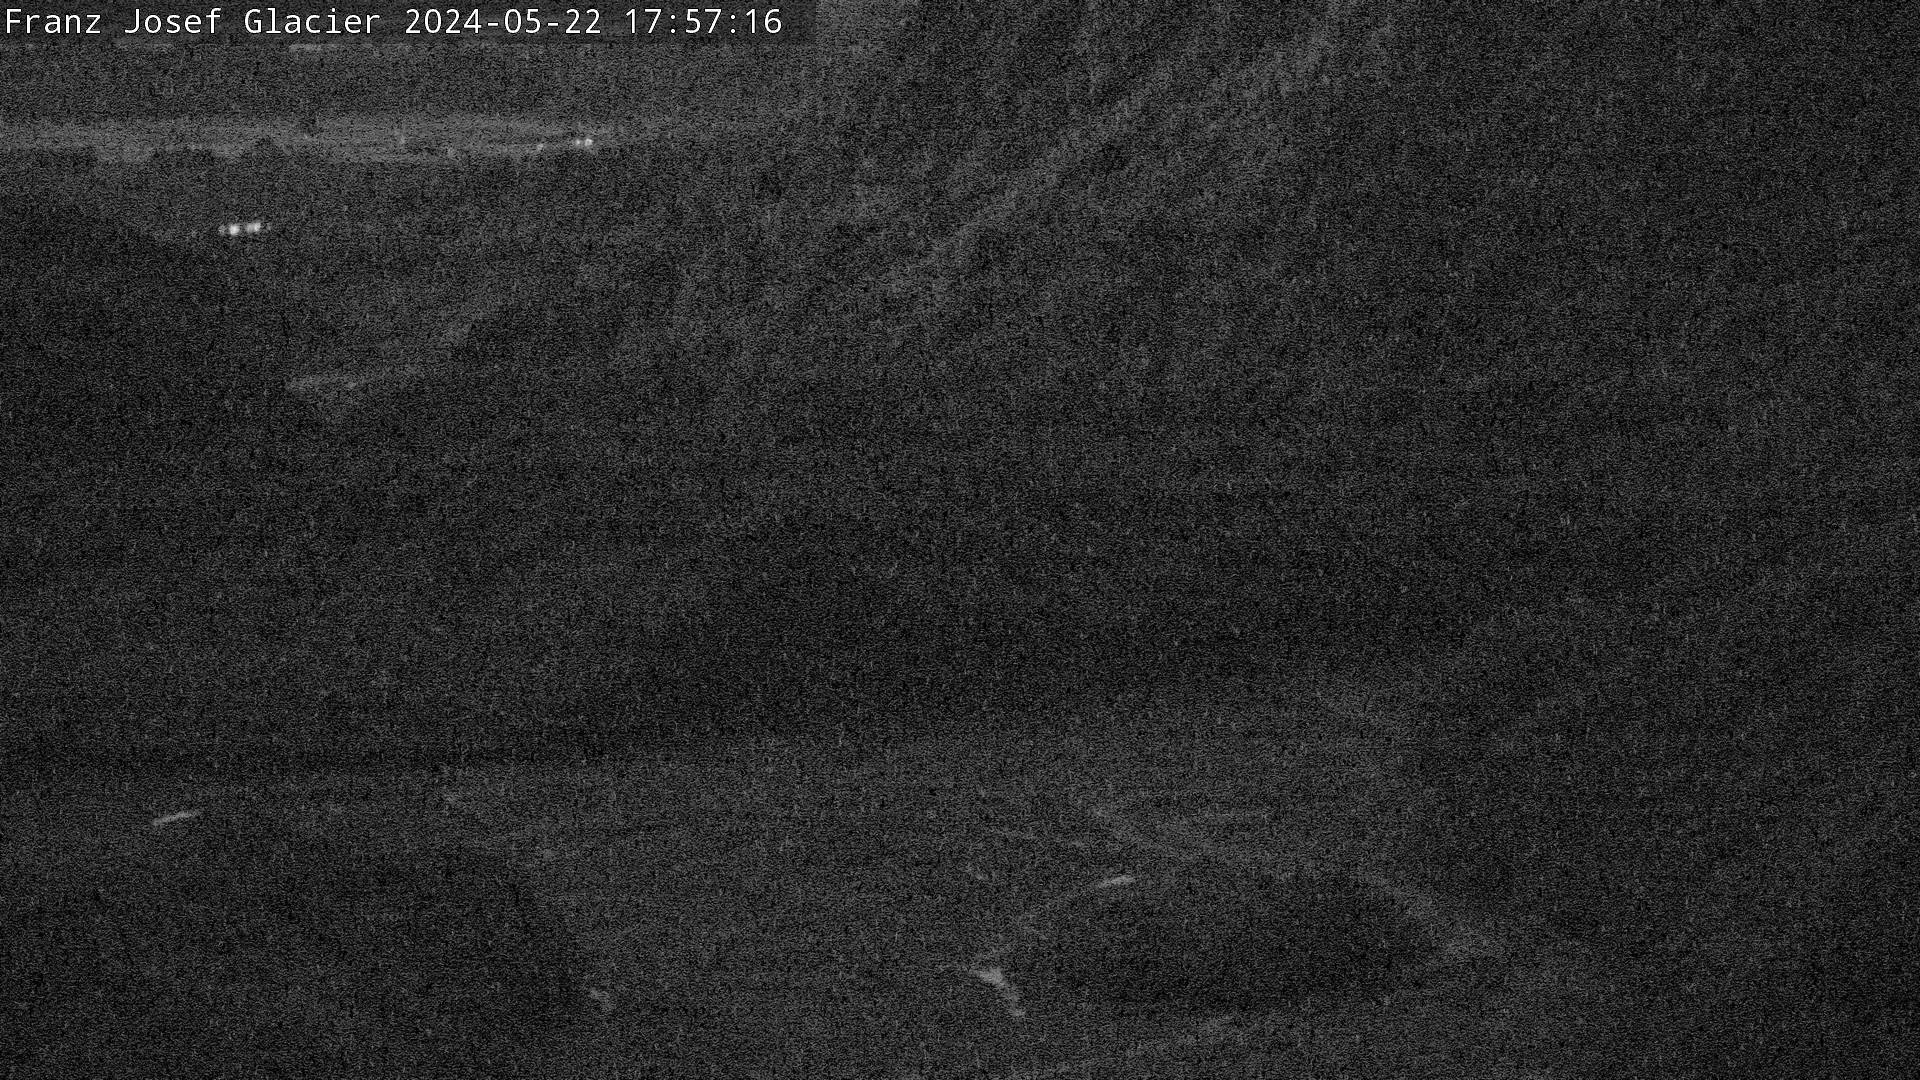 Latest image from Franz Josef Glacier web cam - View 10